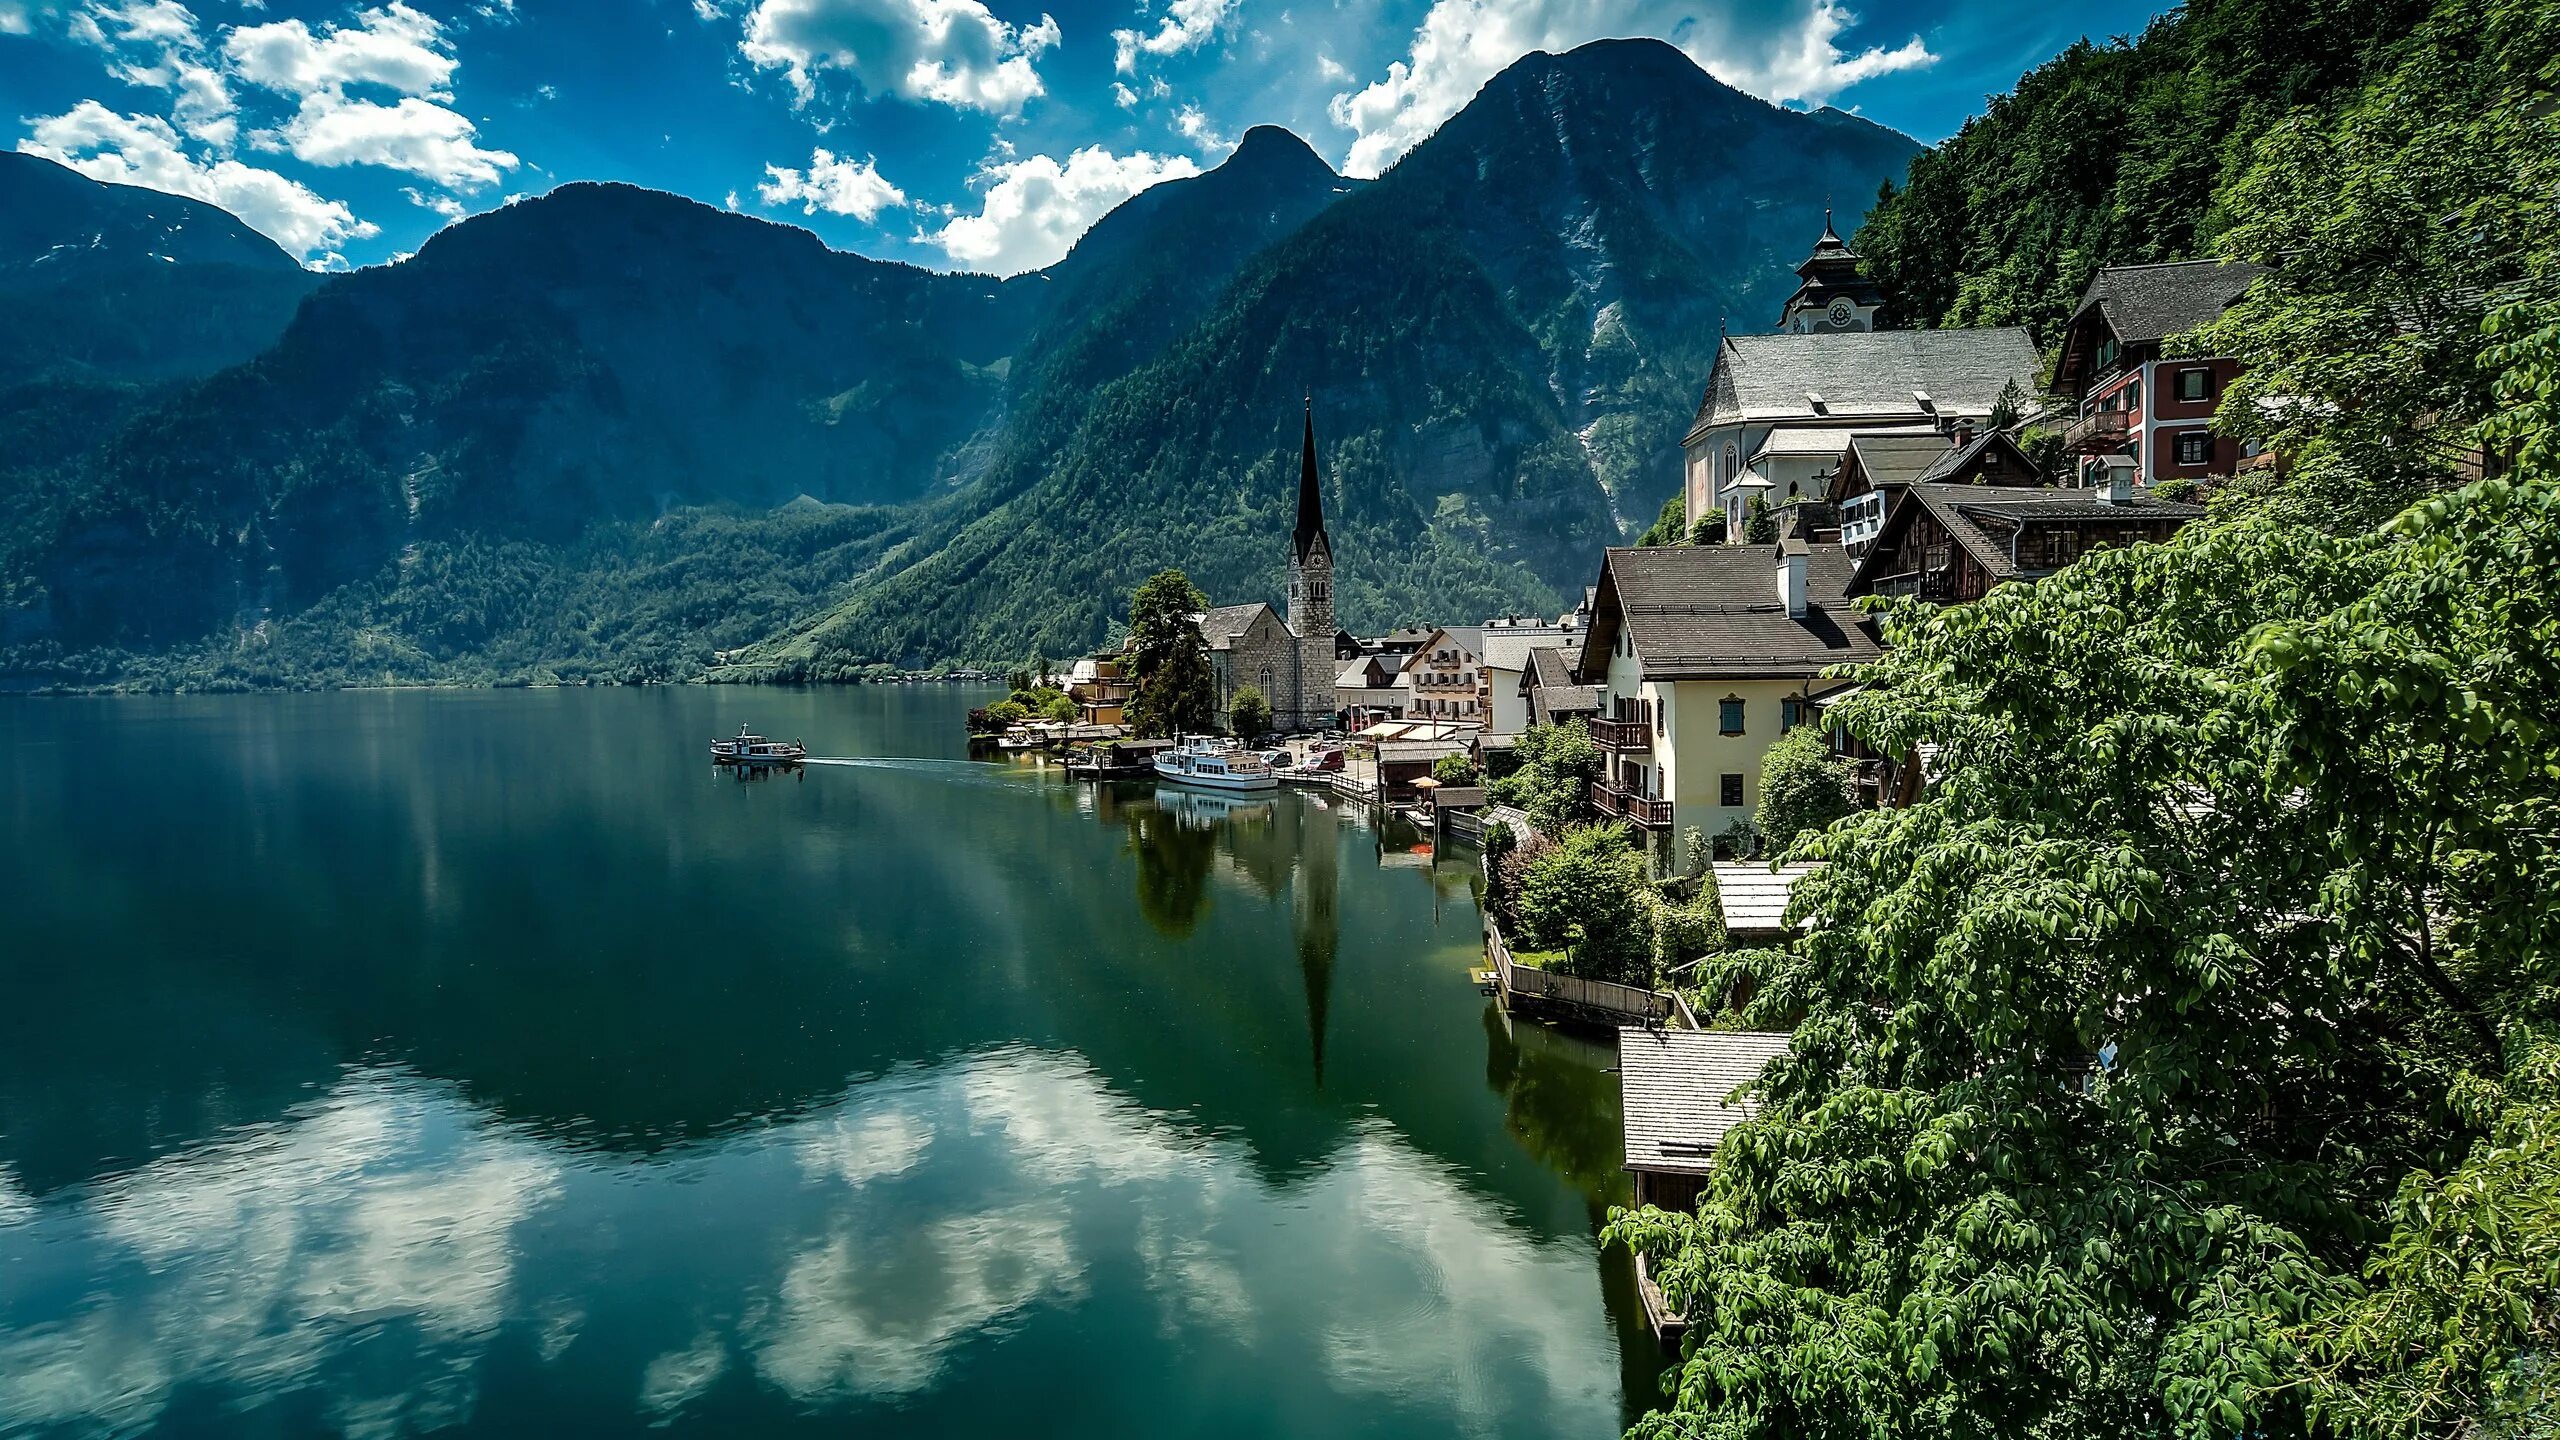 Австрия. Гальштат Австрия. Озеро, Австрия, Hallstatt. Озеро Хальштаттерзее Австрия. Австрия Халльштатт горы озеро Lake Hallstatt Альпы.